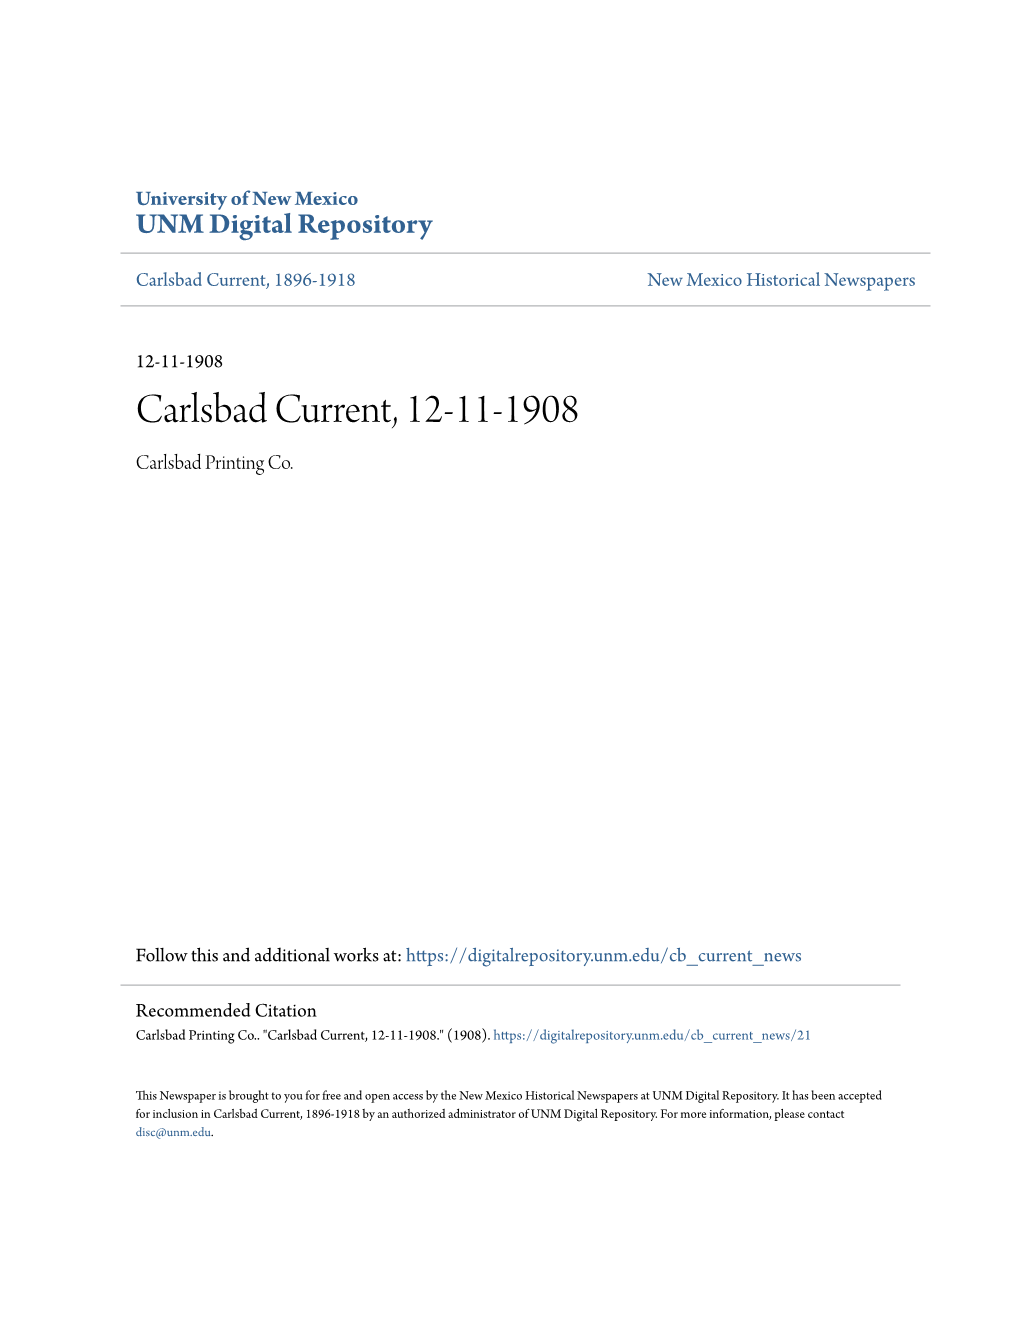 Carlsbad Current, 12-11-1908 Carlsbad Printing Co